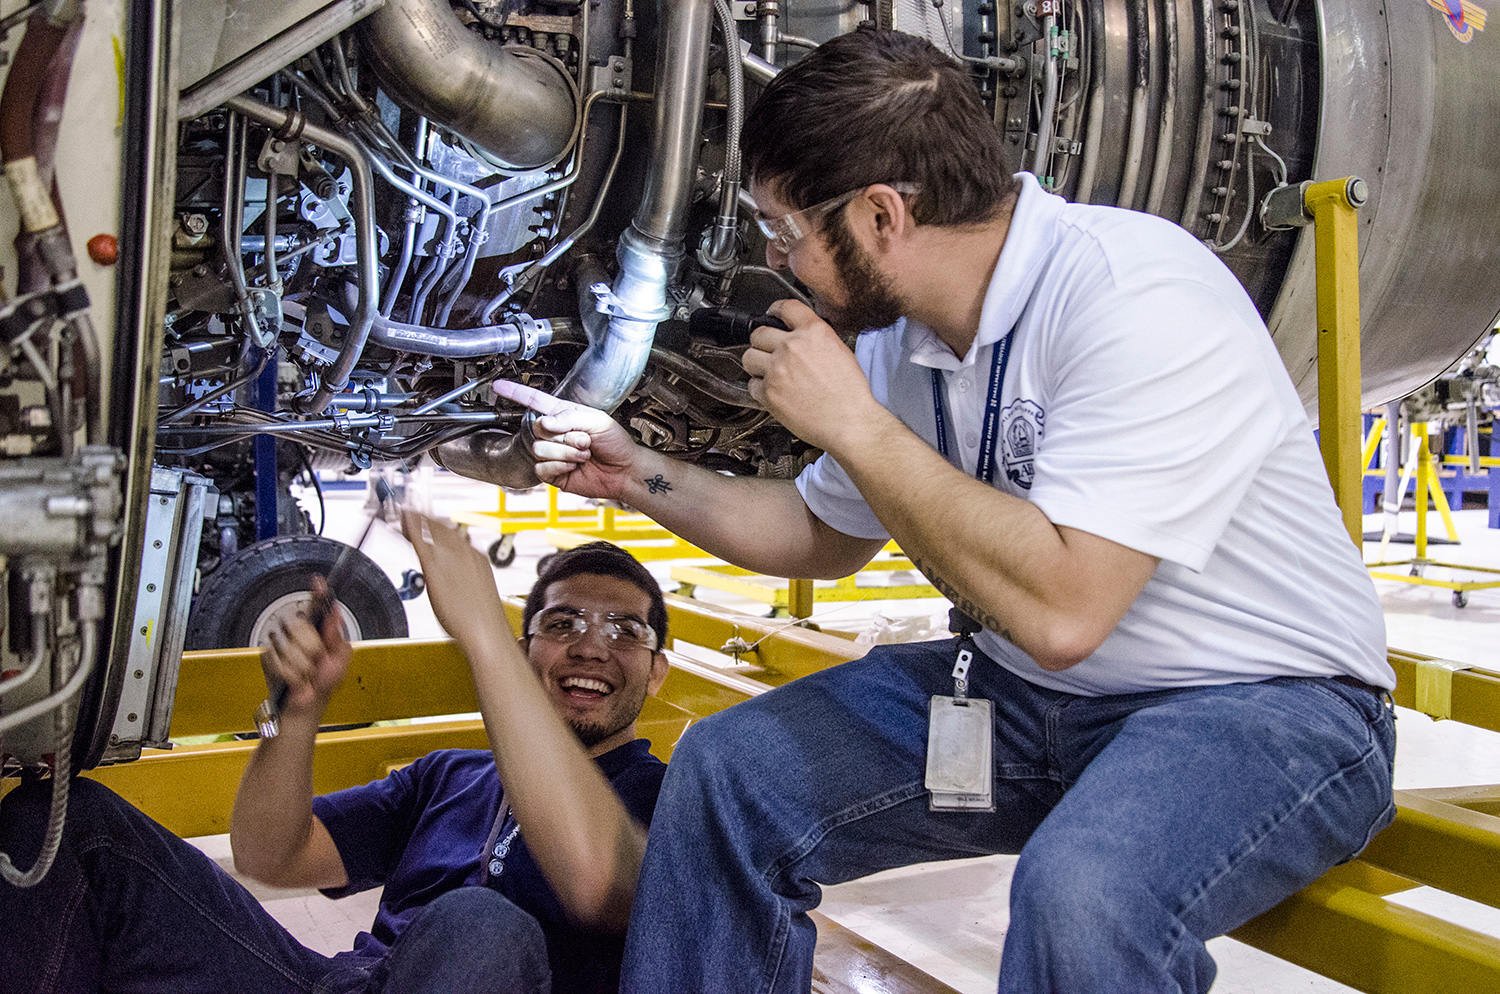 Aeronautics students smiling and working on aircraft engine